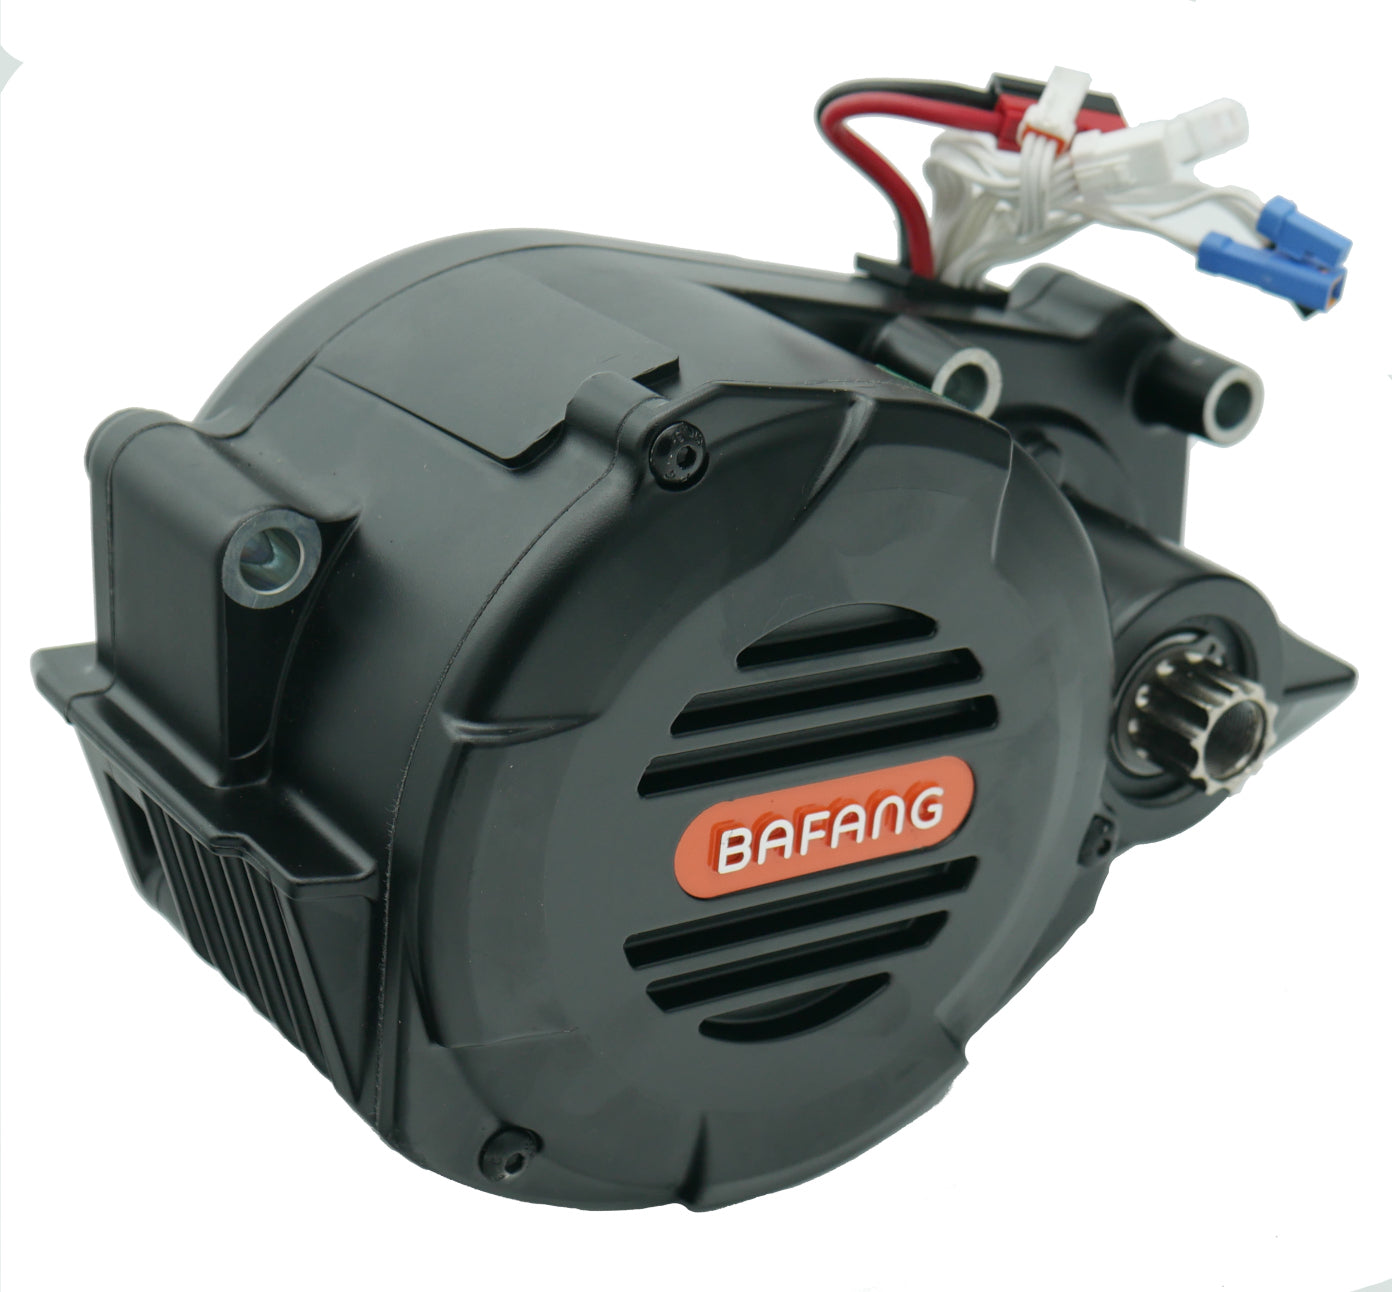 bafang RM G062 1000W fatbike/snowbike motor with strong  torque- BBS, ebike batteries, Bafang M620, Bafang M600,  Bafang M500, Bafang M510, KT controller with display